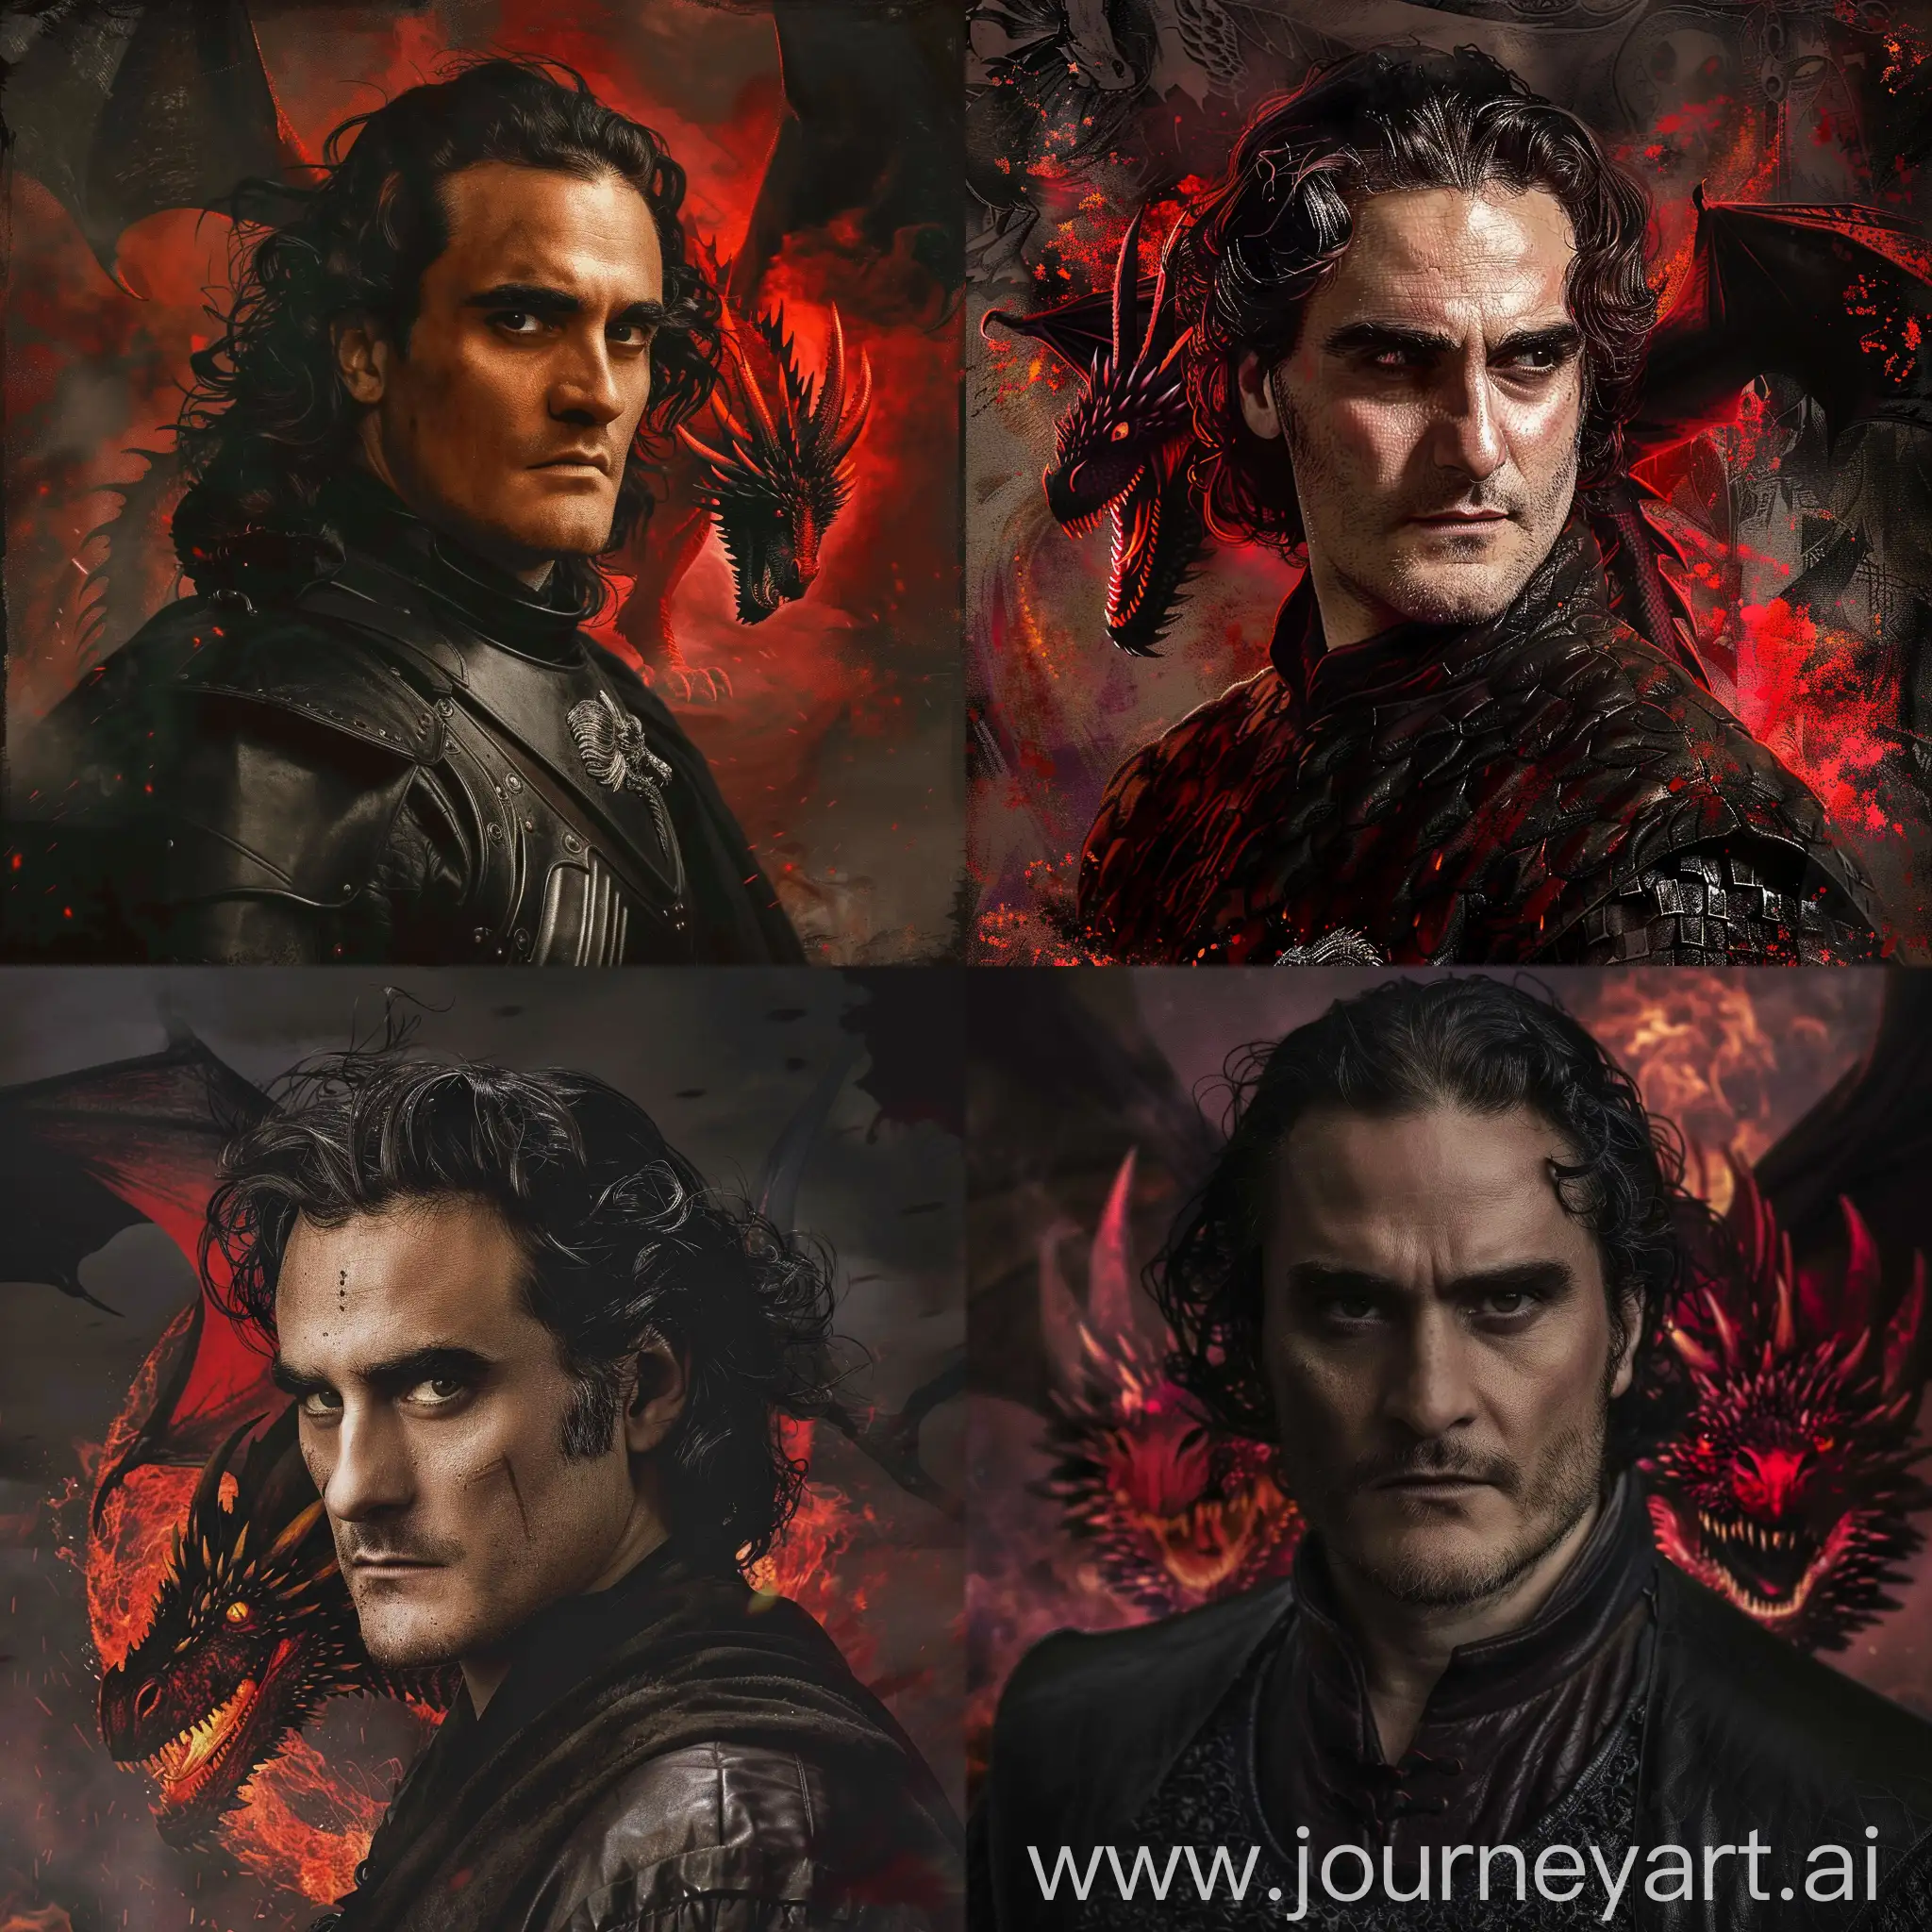 Joaquin-Phoenix-Targaryen-Prince-Portrait-with-Red-and-Black-Dragon